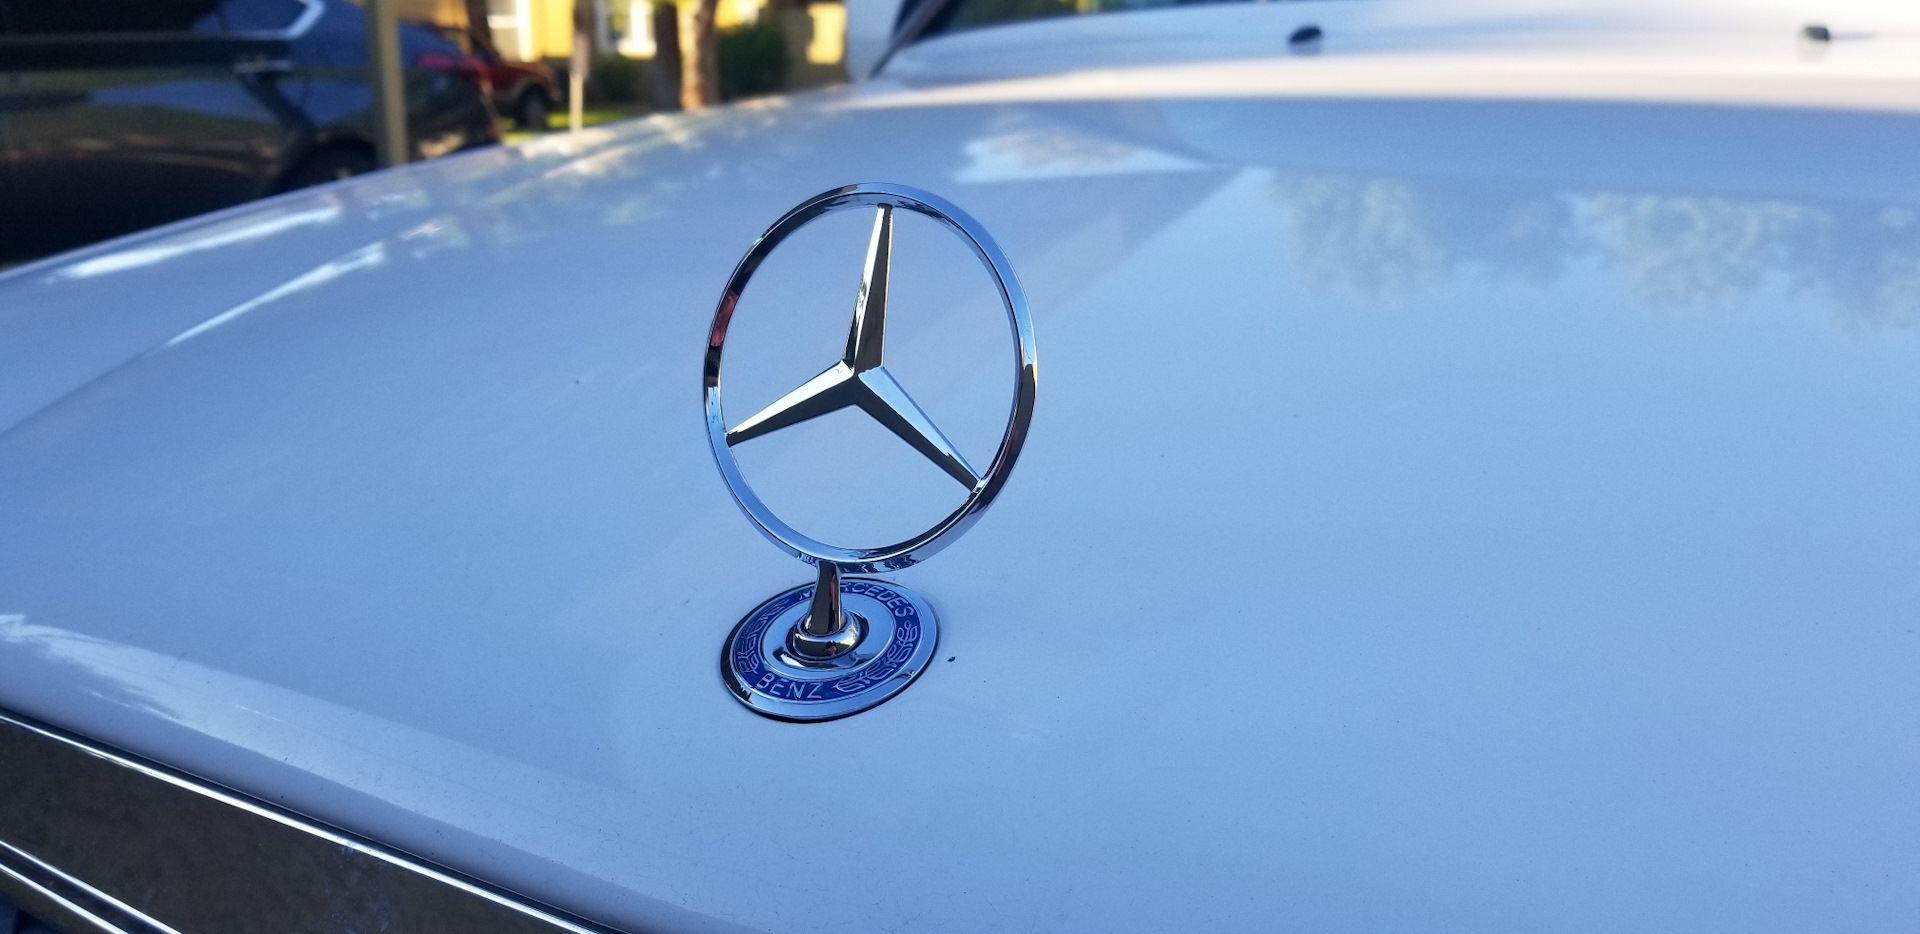 Звезда на капот. Mercedes-Benz GLK 2012 прицел на капоте. Мерседес значок на капоте GLK. Значок Мерседес на капот GLC 300. Звезда на капоте Мерседес ГЛК.